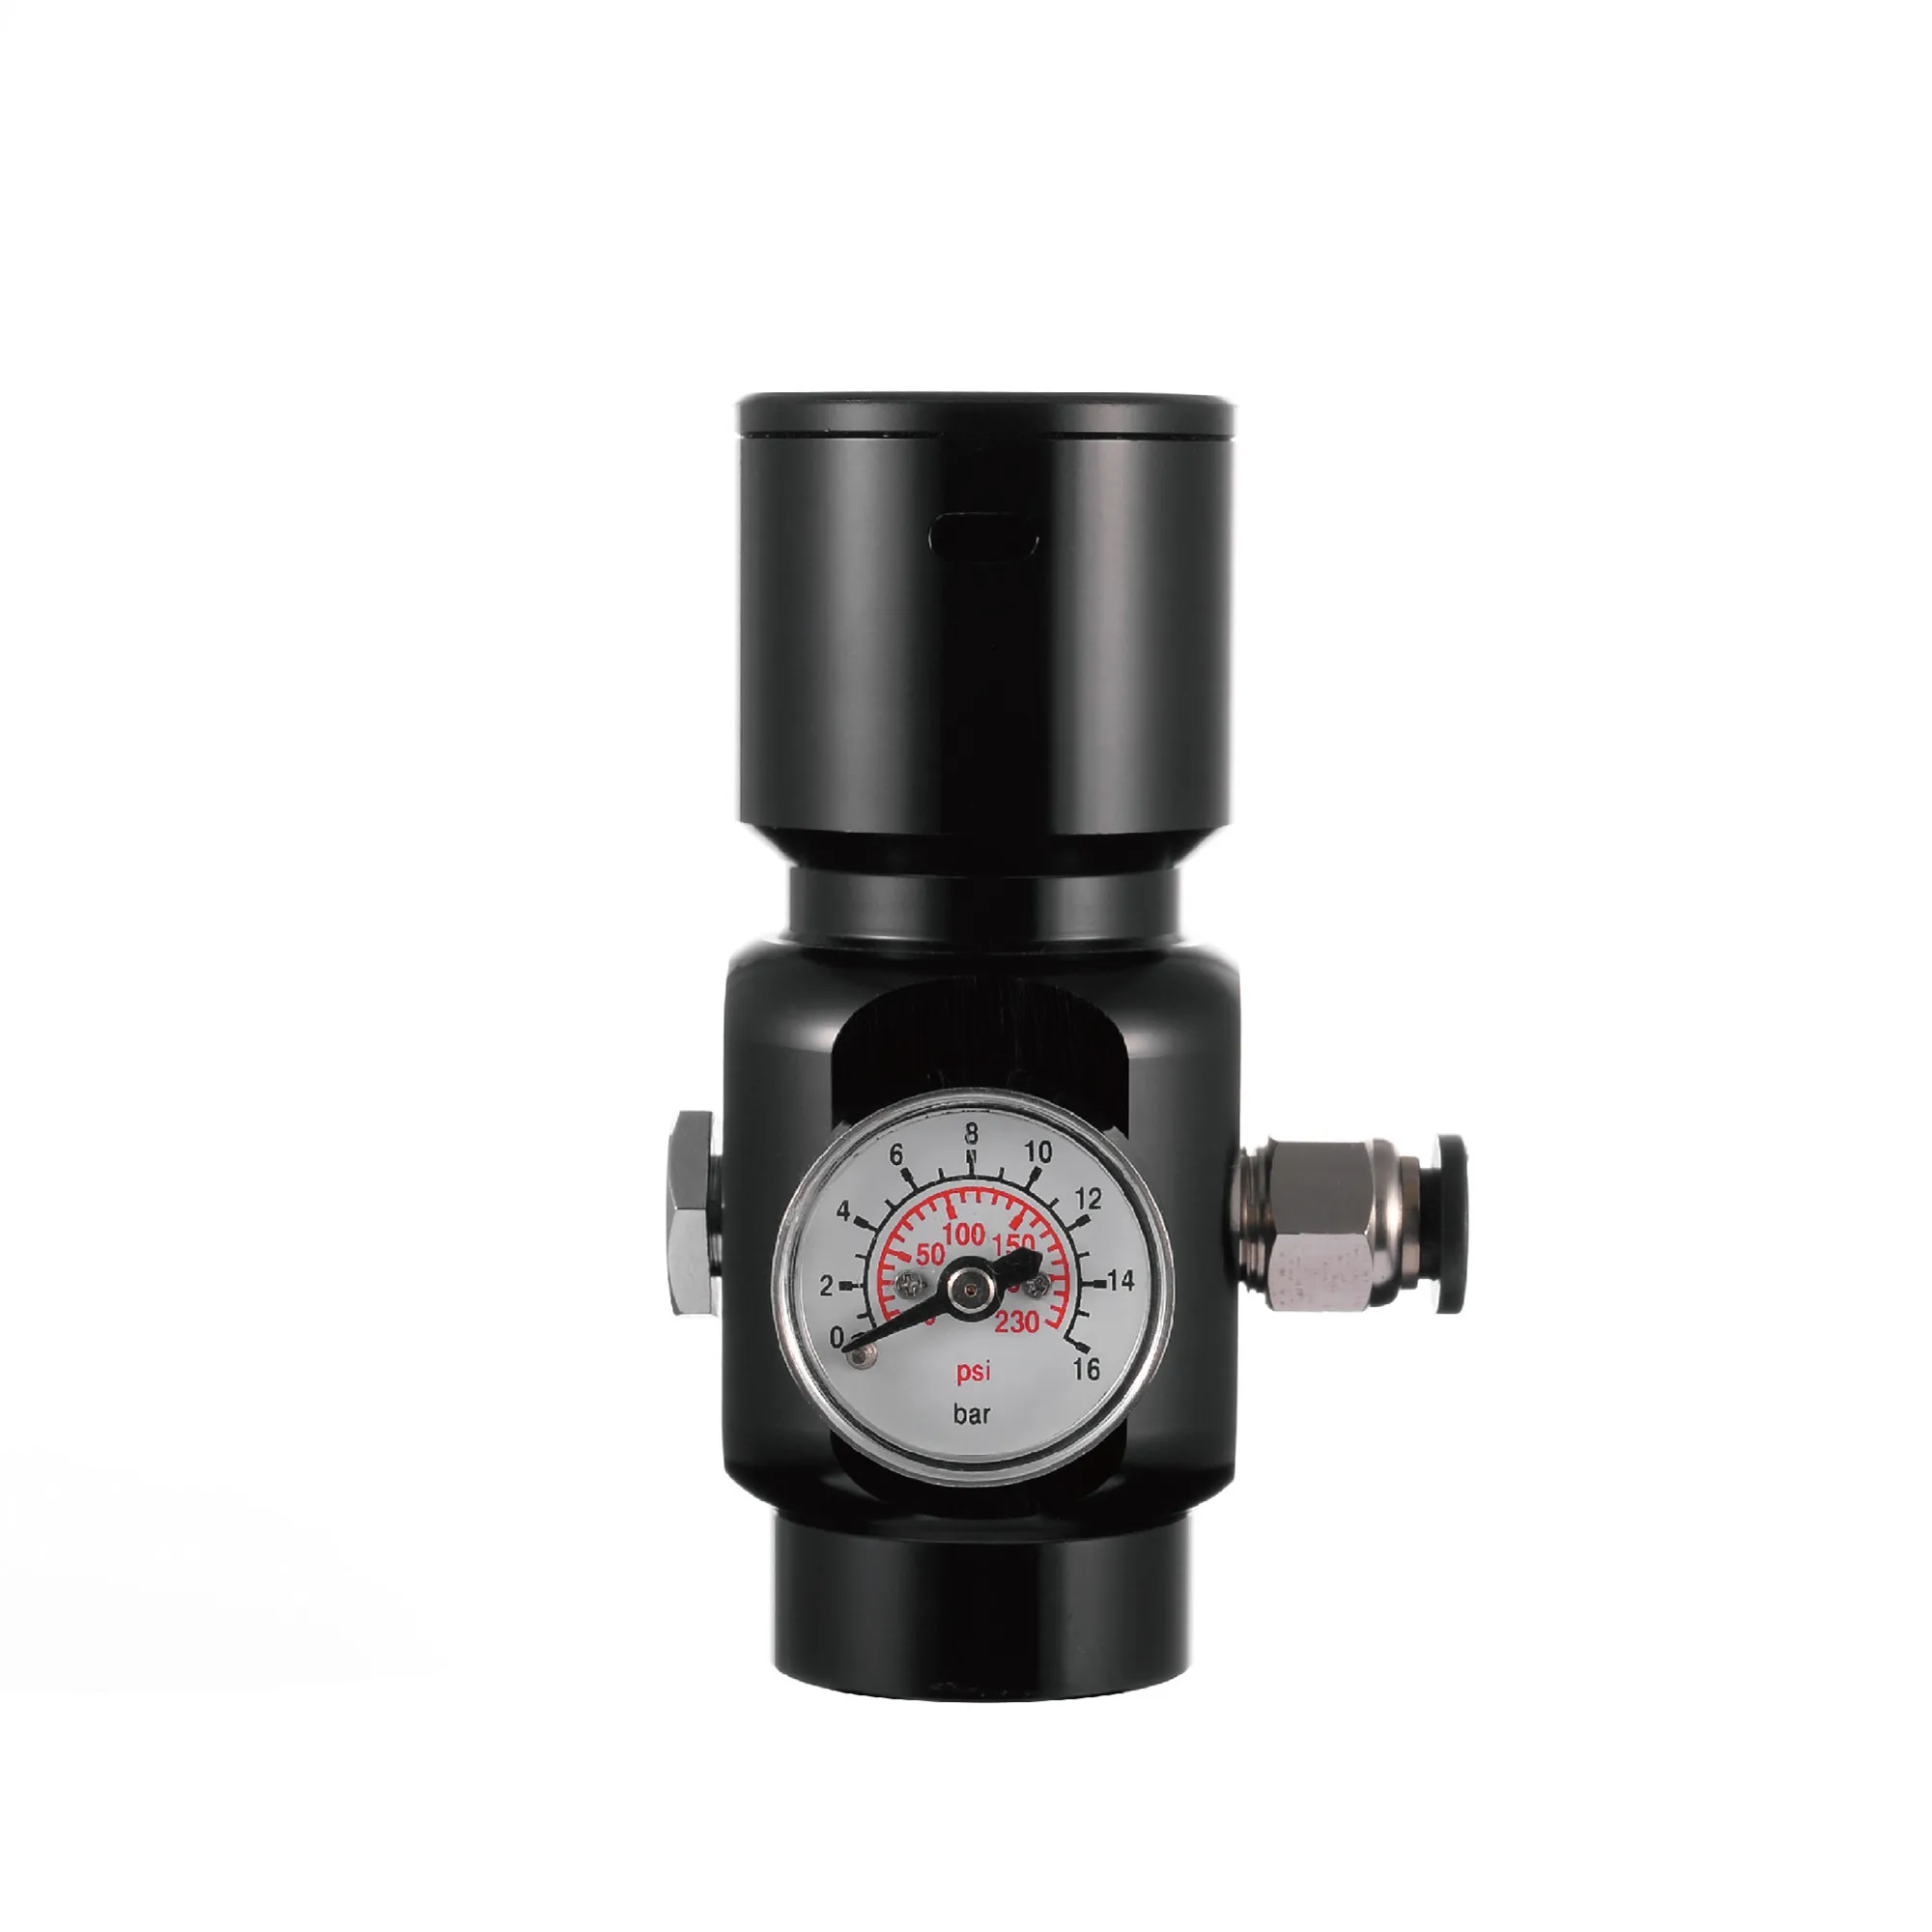 
Paintball tank CO2 pressure regulator /fixed output pressure regulator  (60775486095)